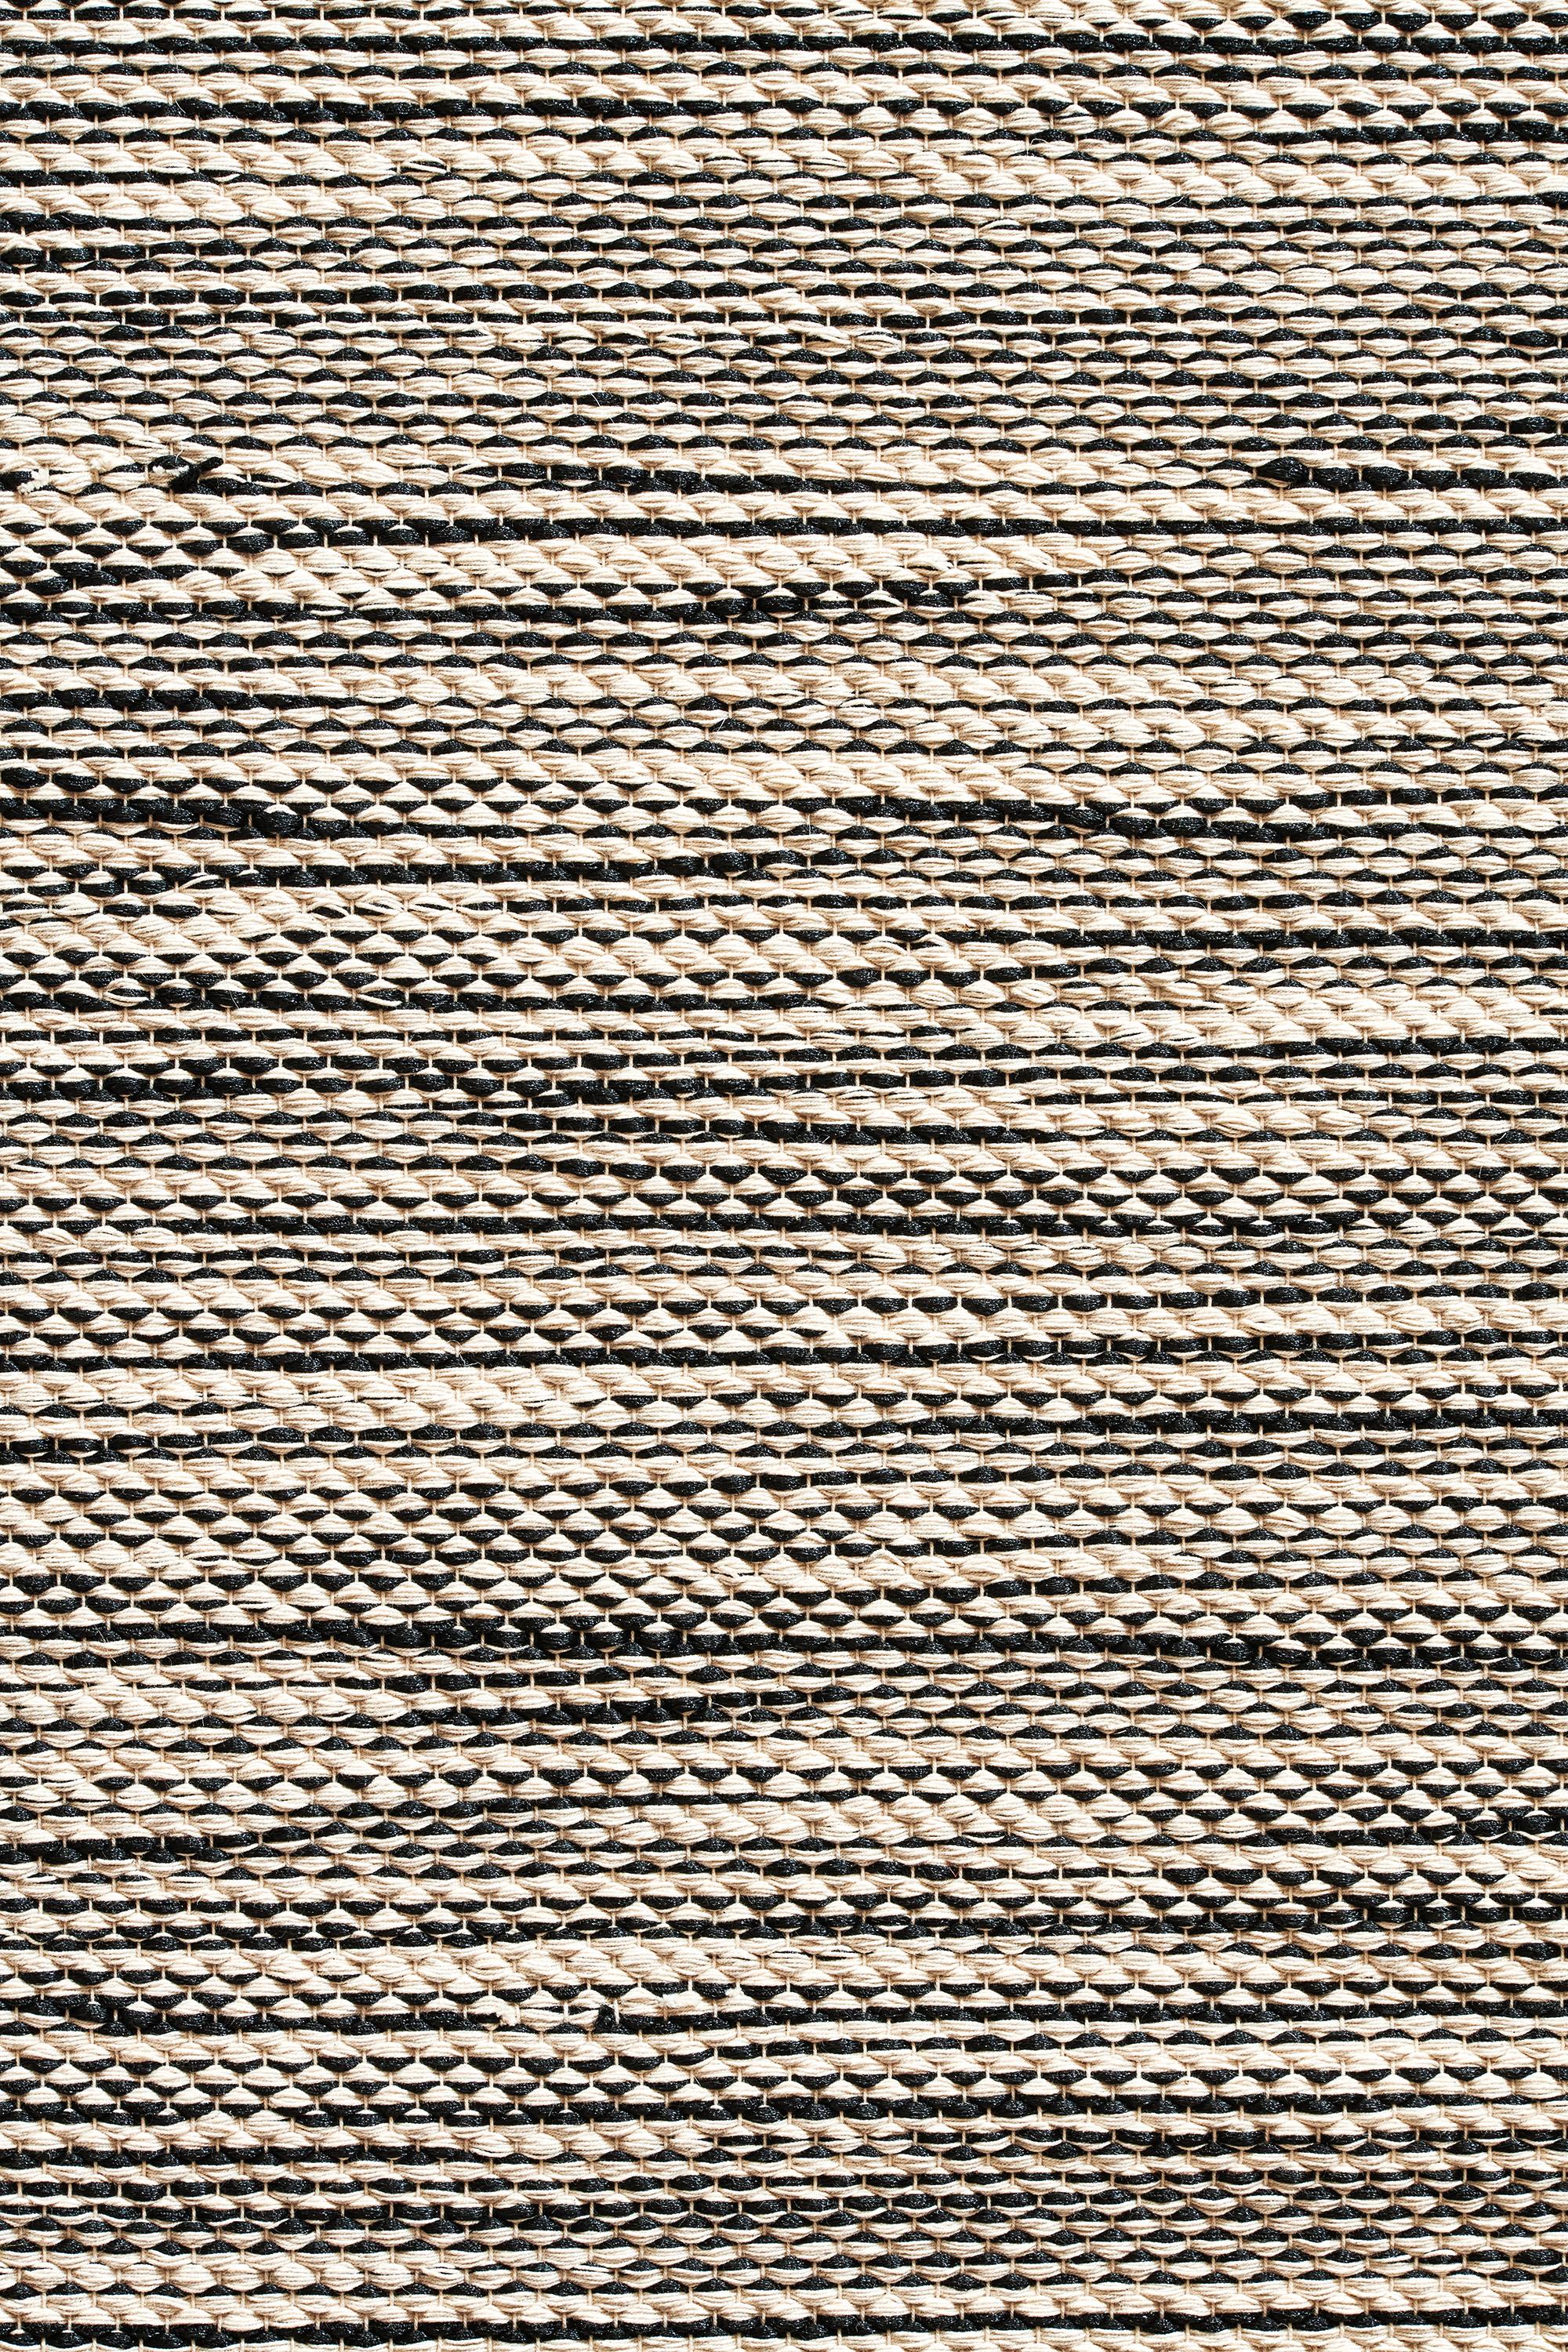 Israeli 'Rivers' Handmade Woven Indoor Rug in Black Sand by Iota For Sale